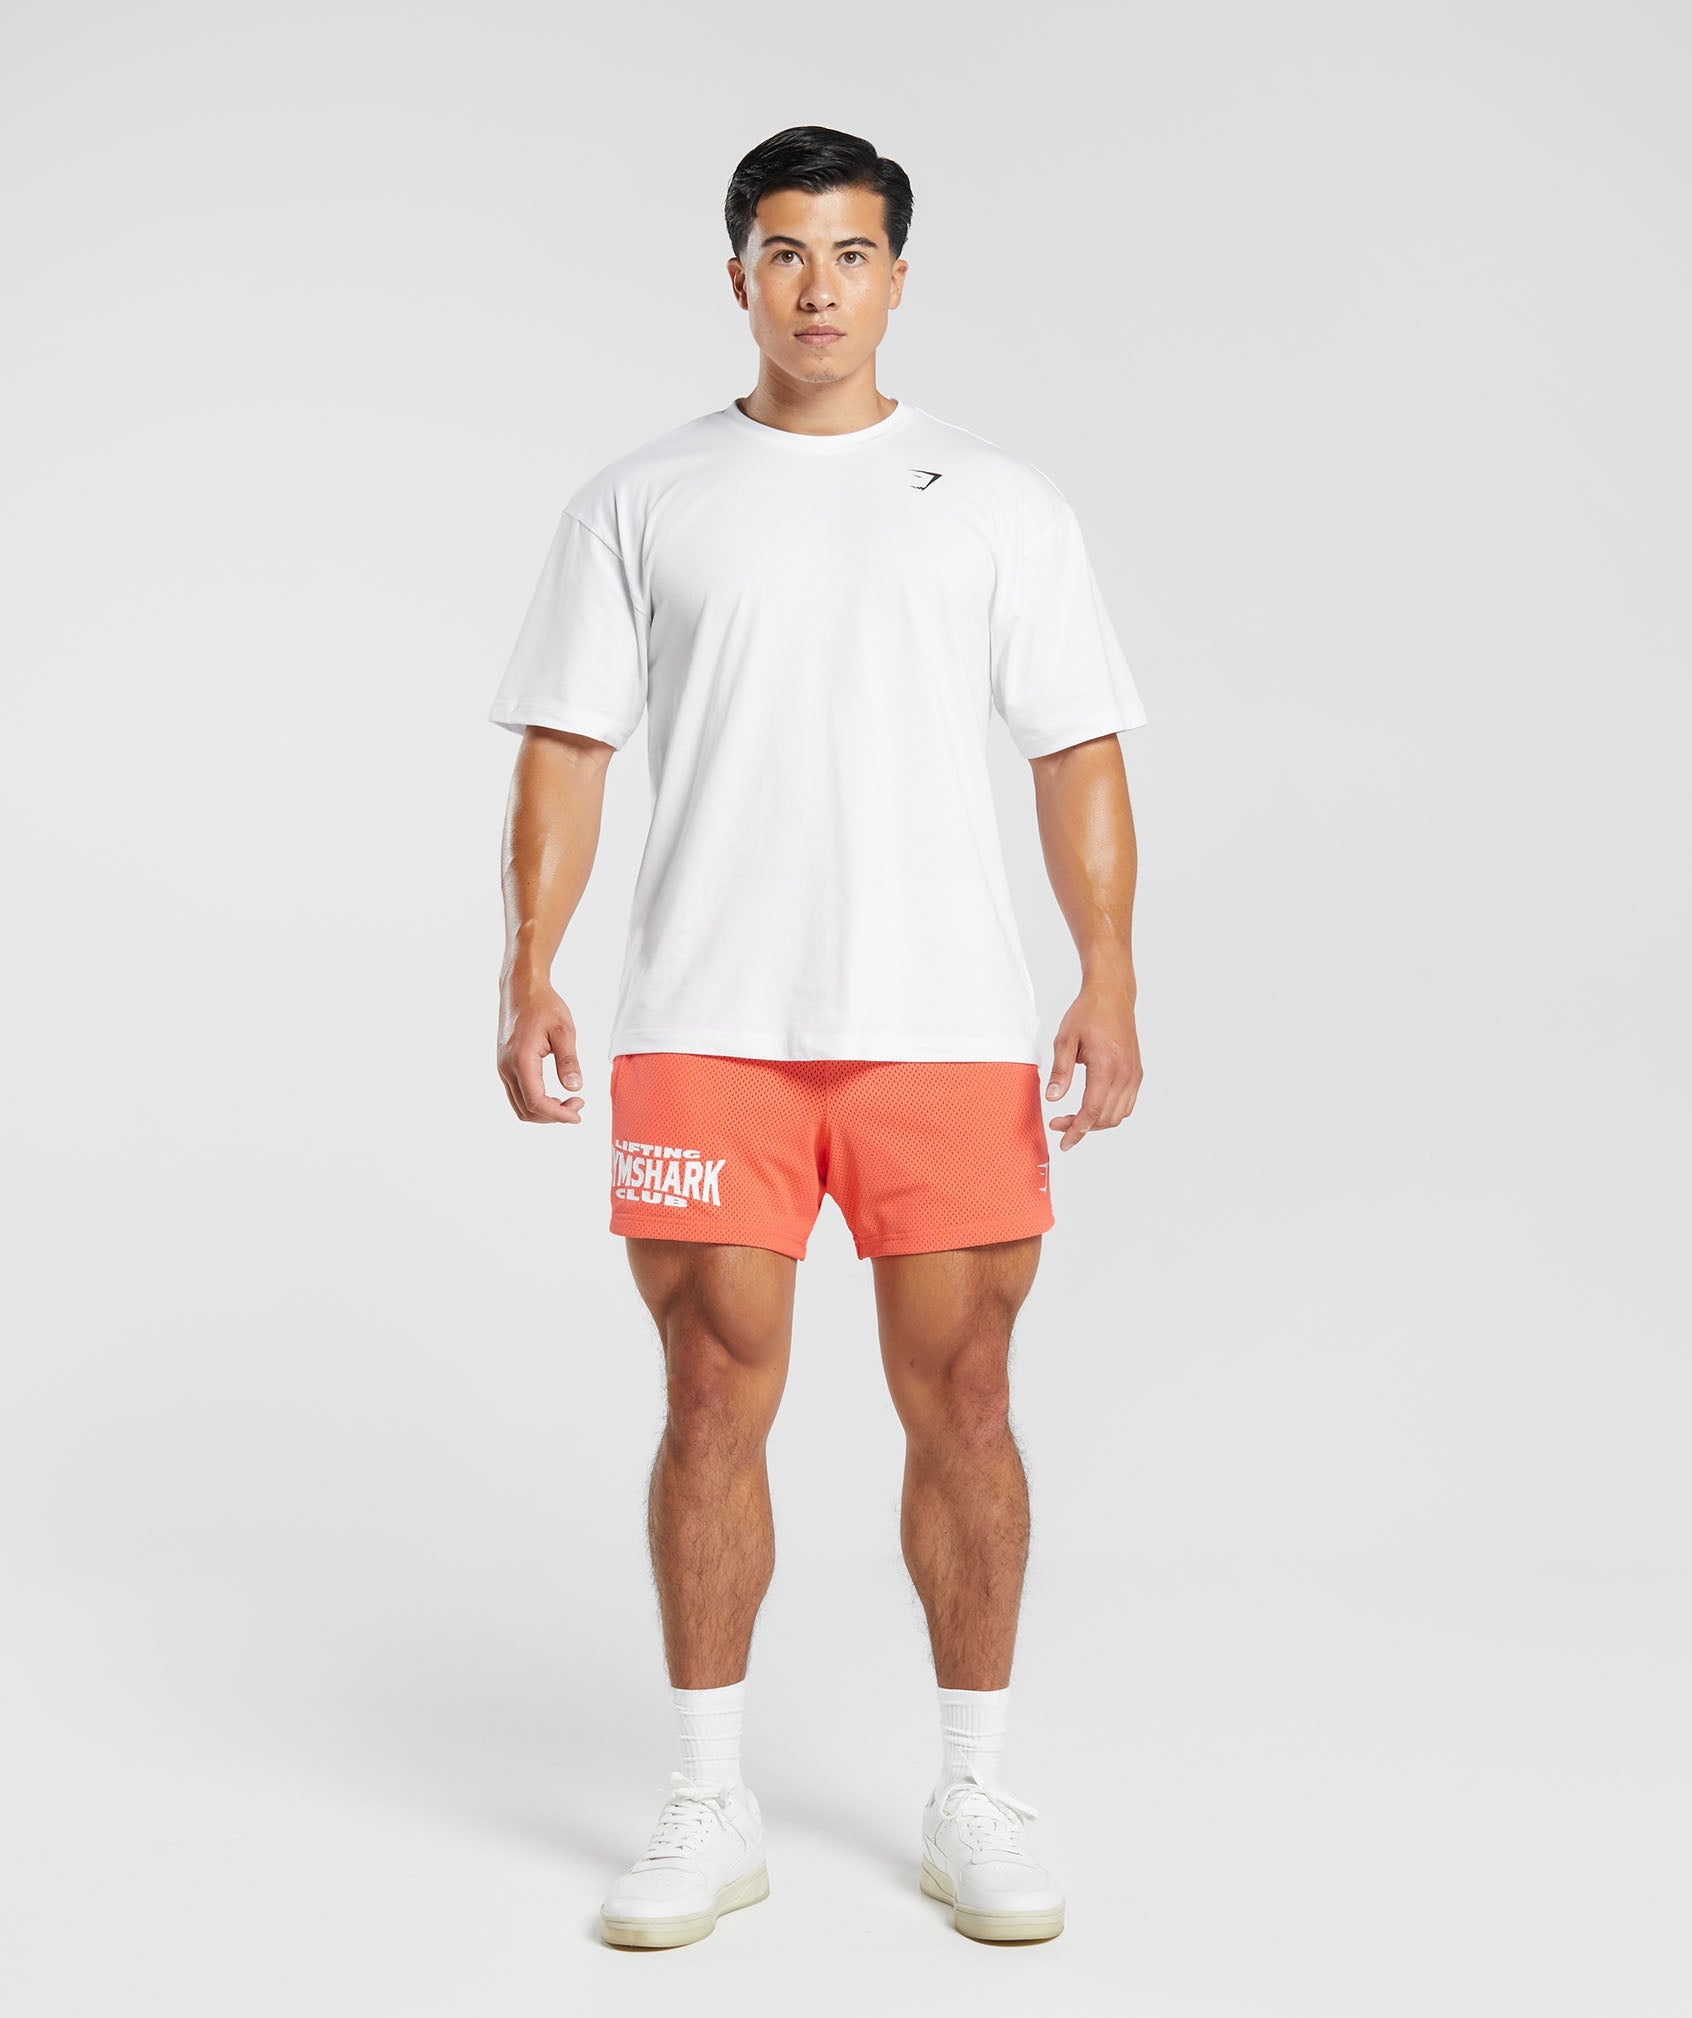 Lifting Club Mesh 5" Shorts in Solstice Orange - view 4